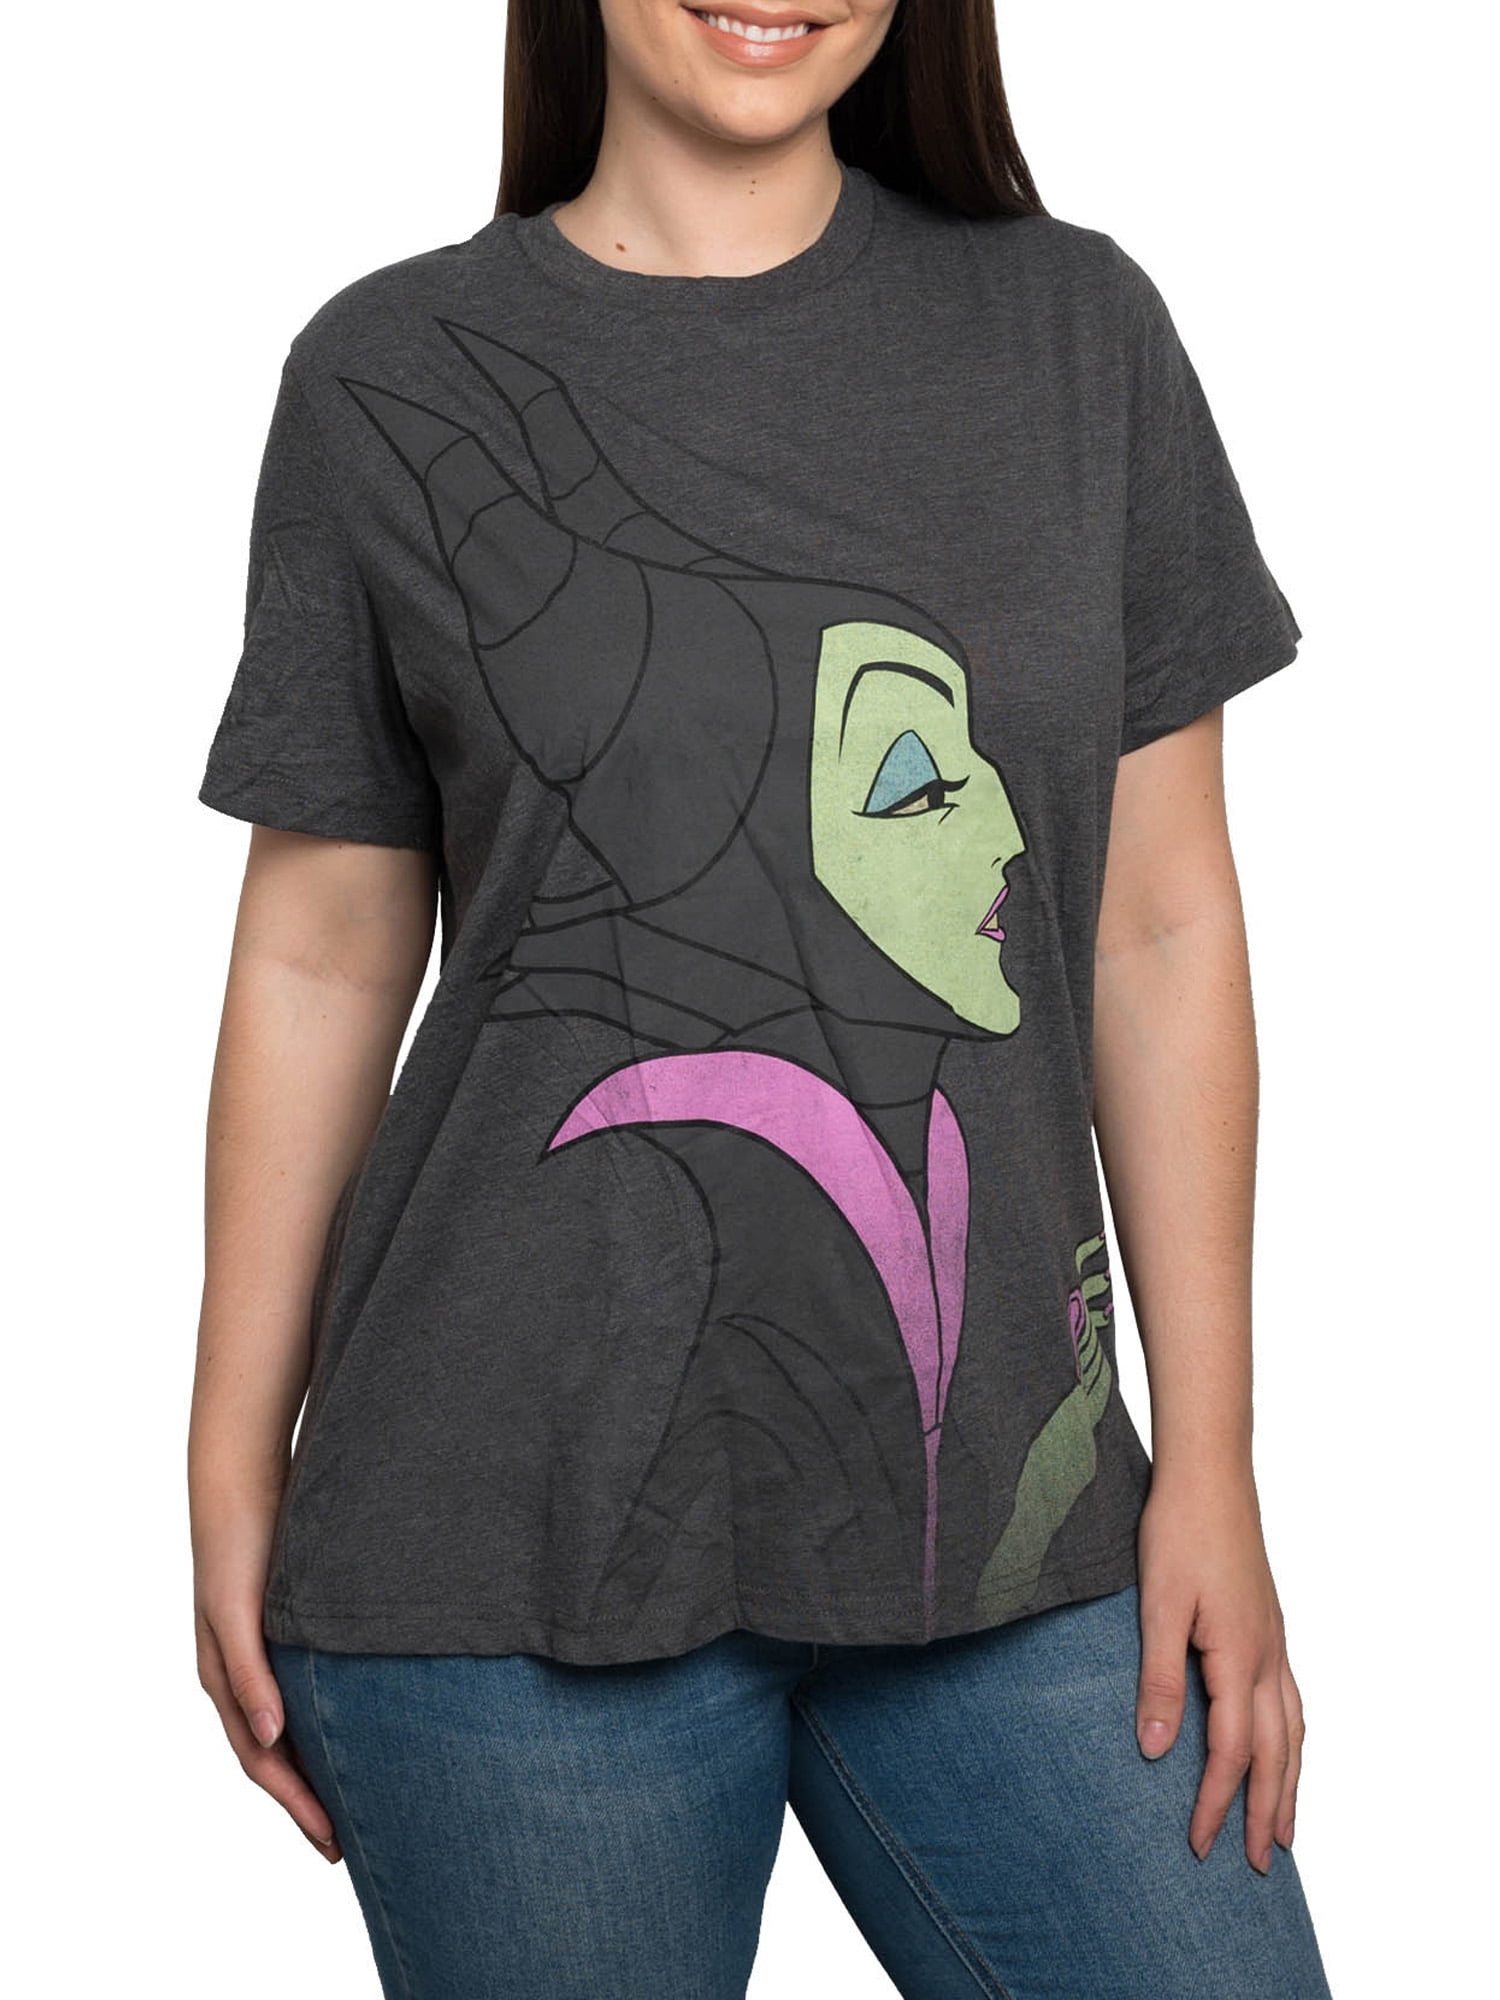 Disney Women's Villains Maleficent Drama Queen Plus Size T-Shirt